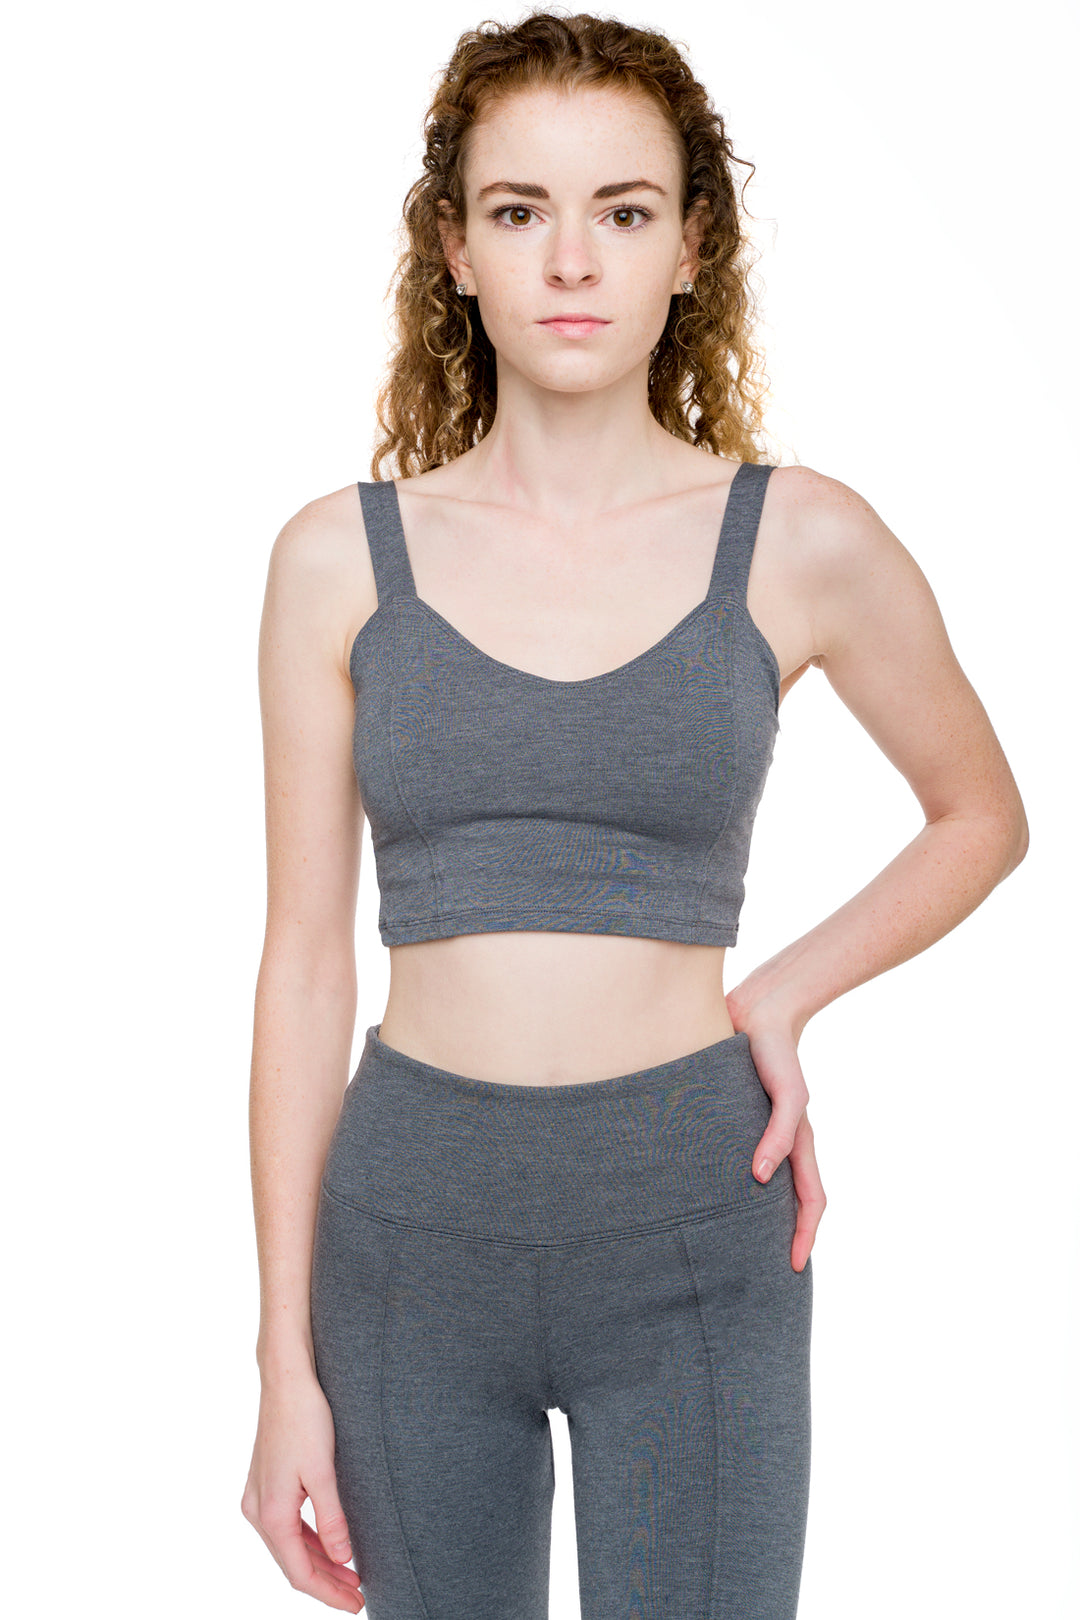 Hazel Tech-Sports Bra Comfort Bra Underwear Wirefree Padded Yoga